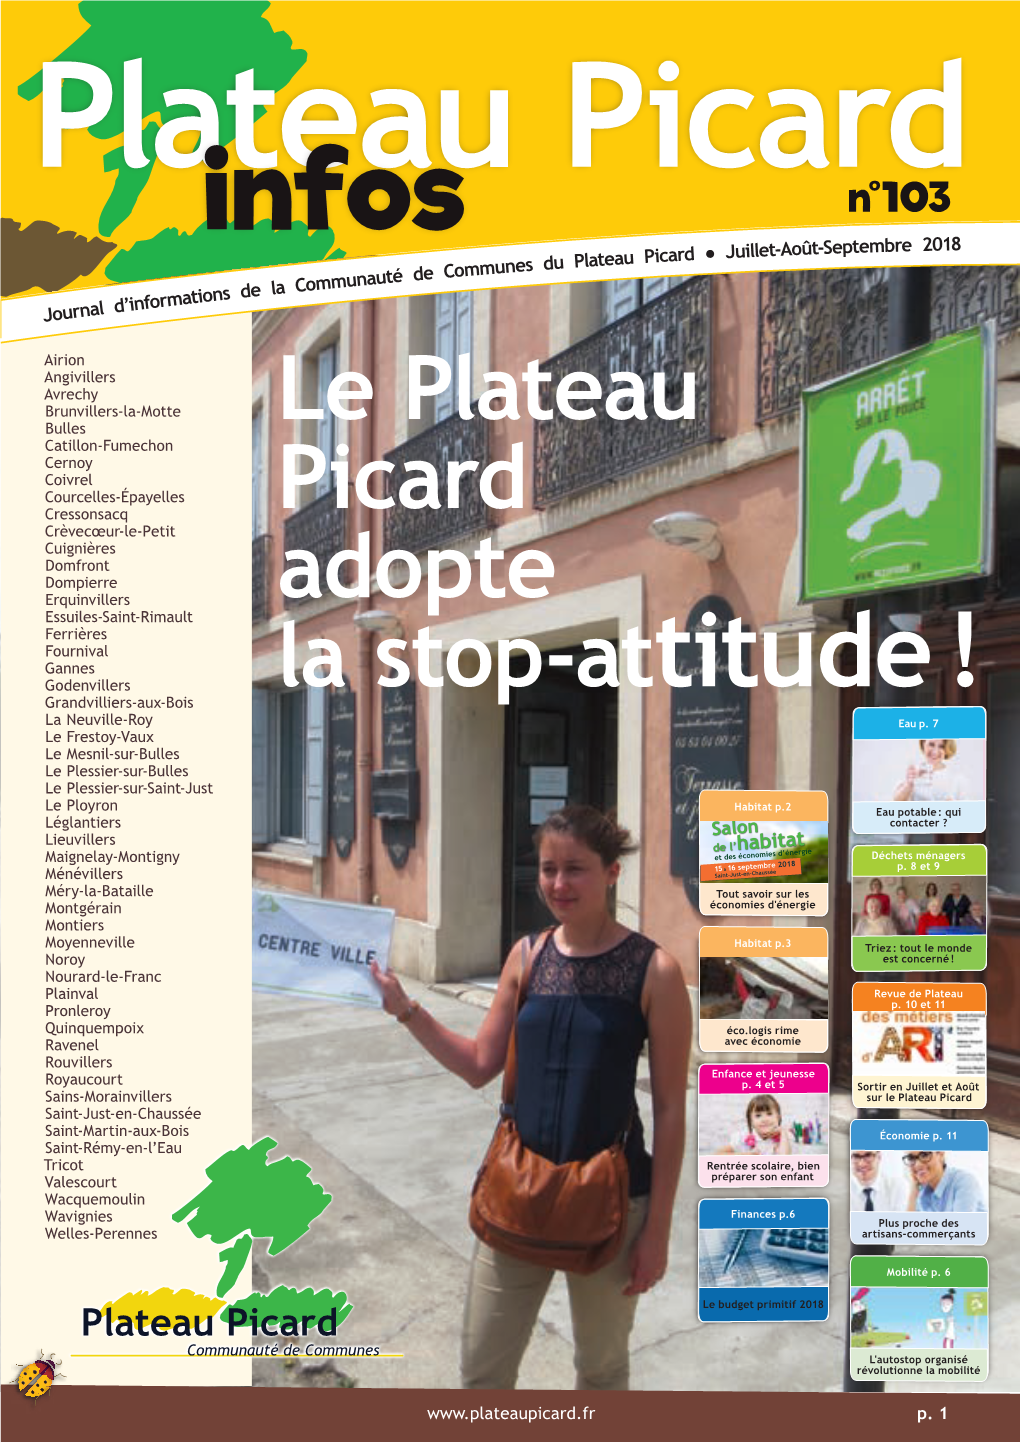 Le Plateau Picard Adopte La Stop-Attitude !